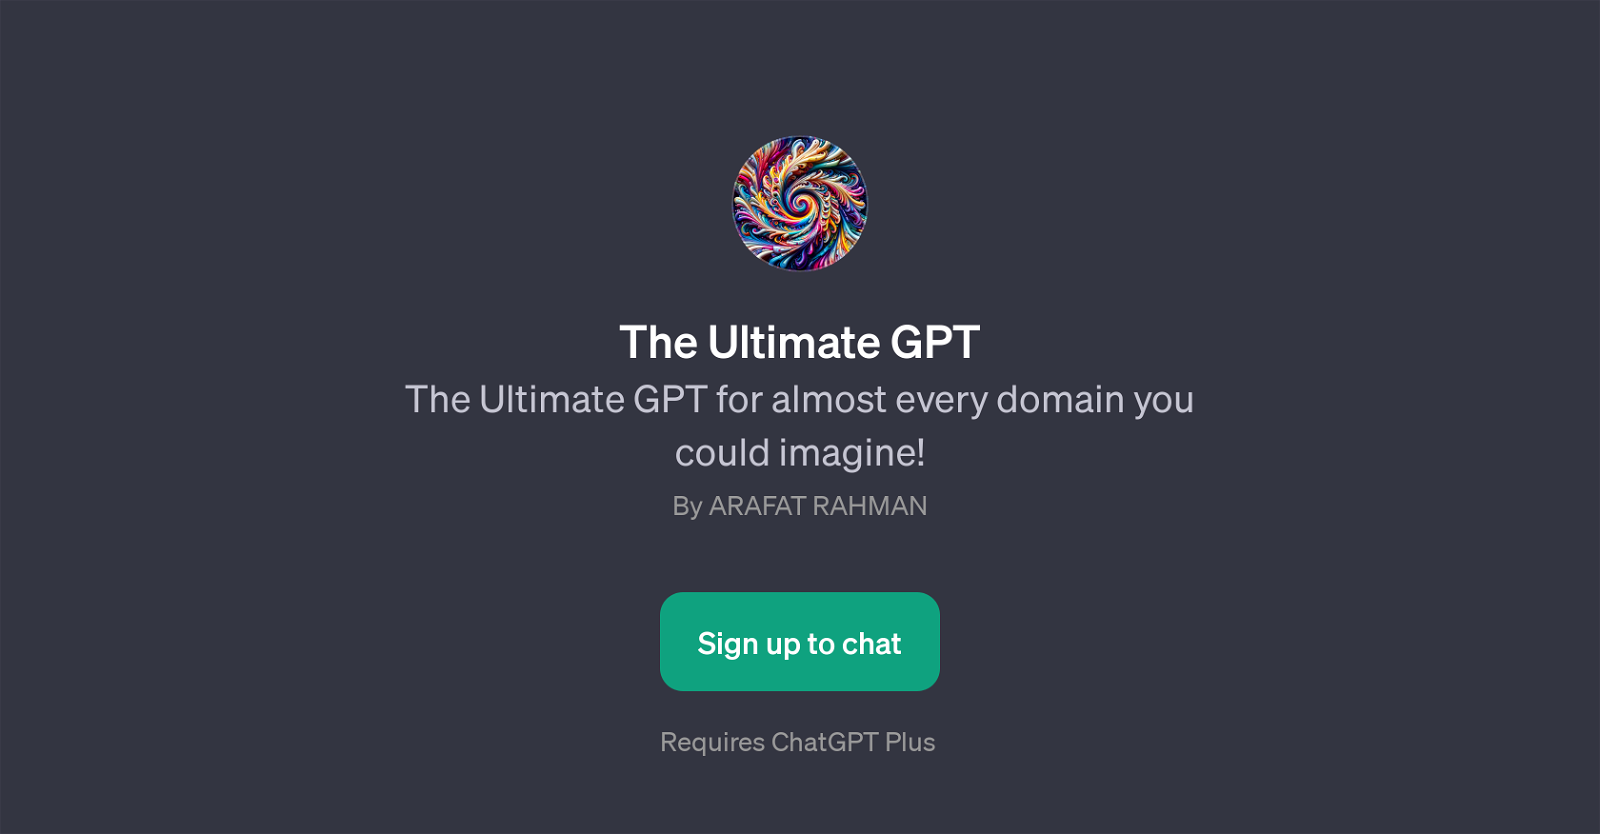 The Ultimate GPT website